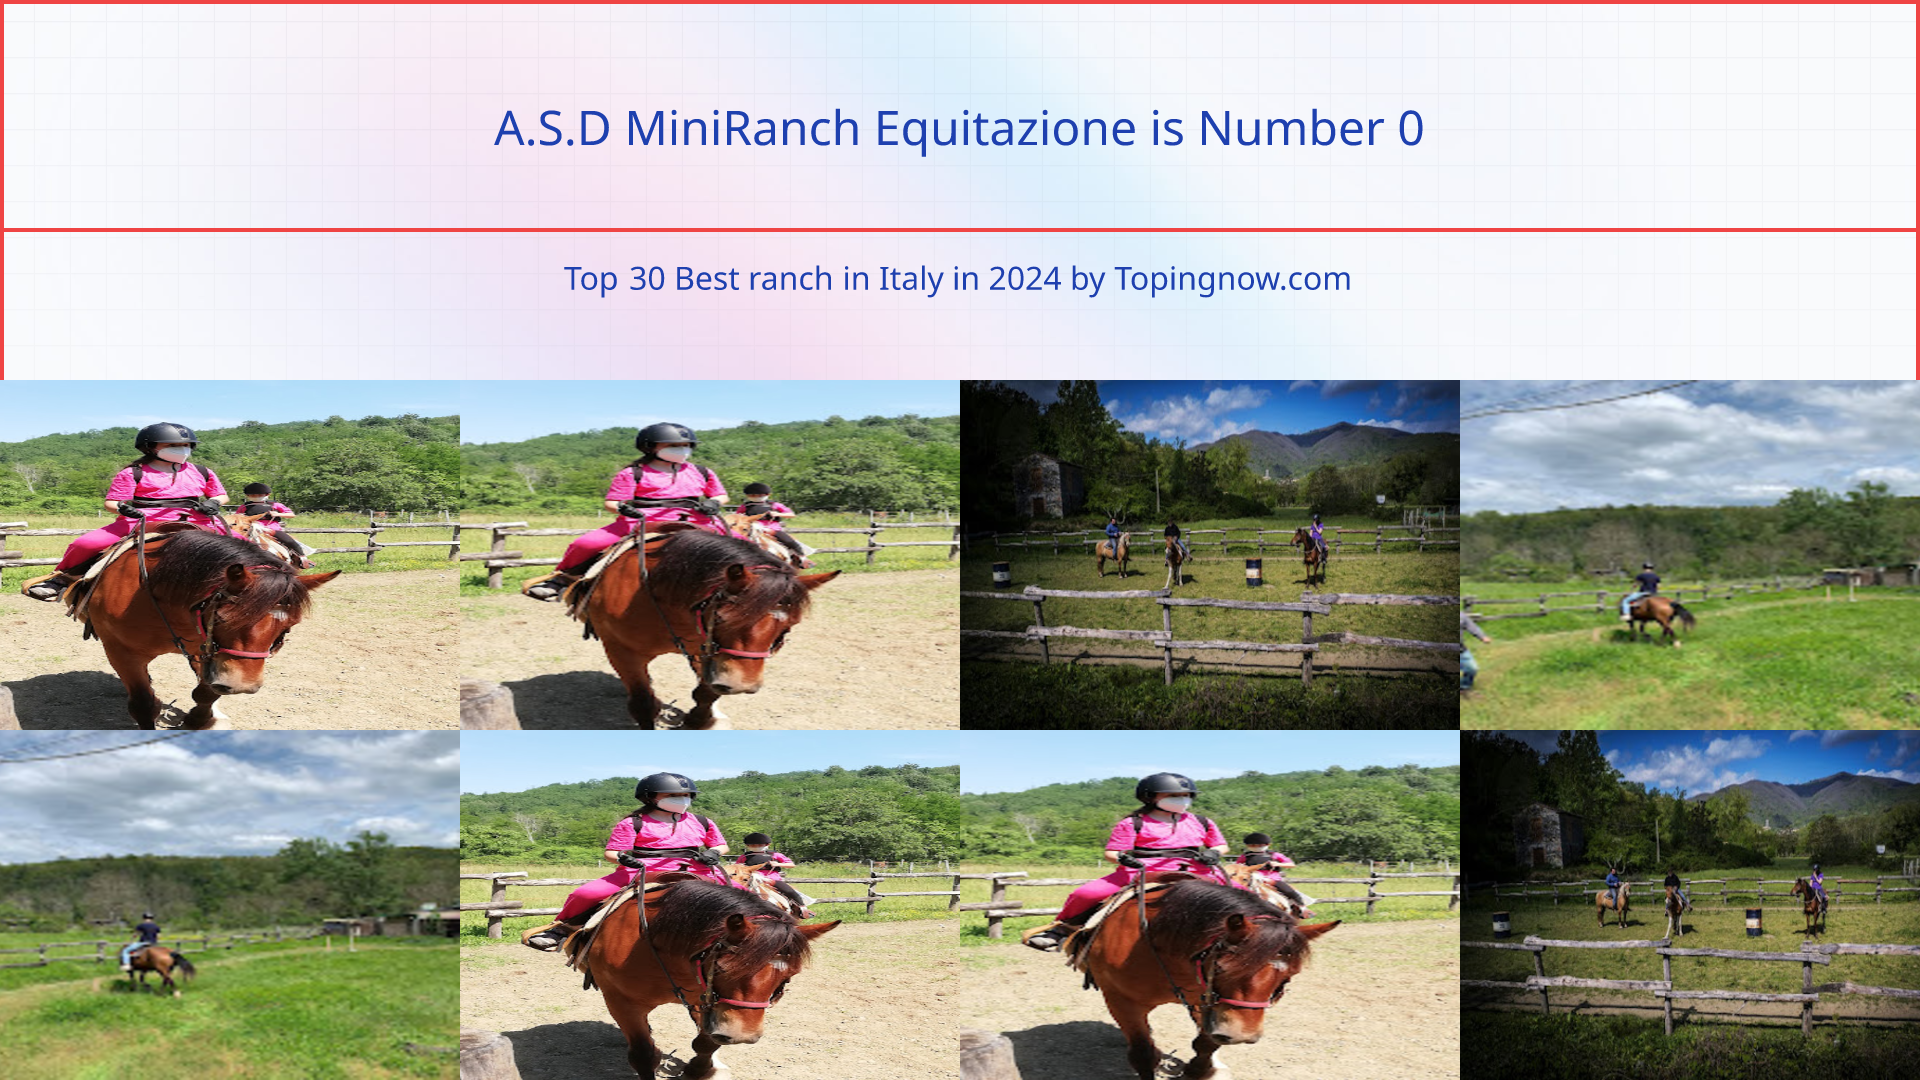 A.S.D MiniRanch Equitazione: Top 30 Best ranch in Italy in 2024